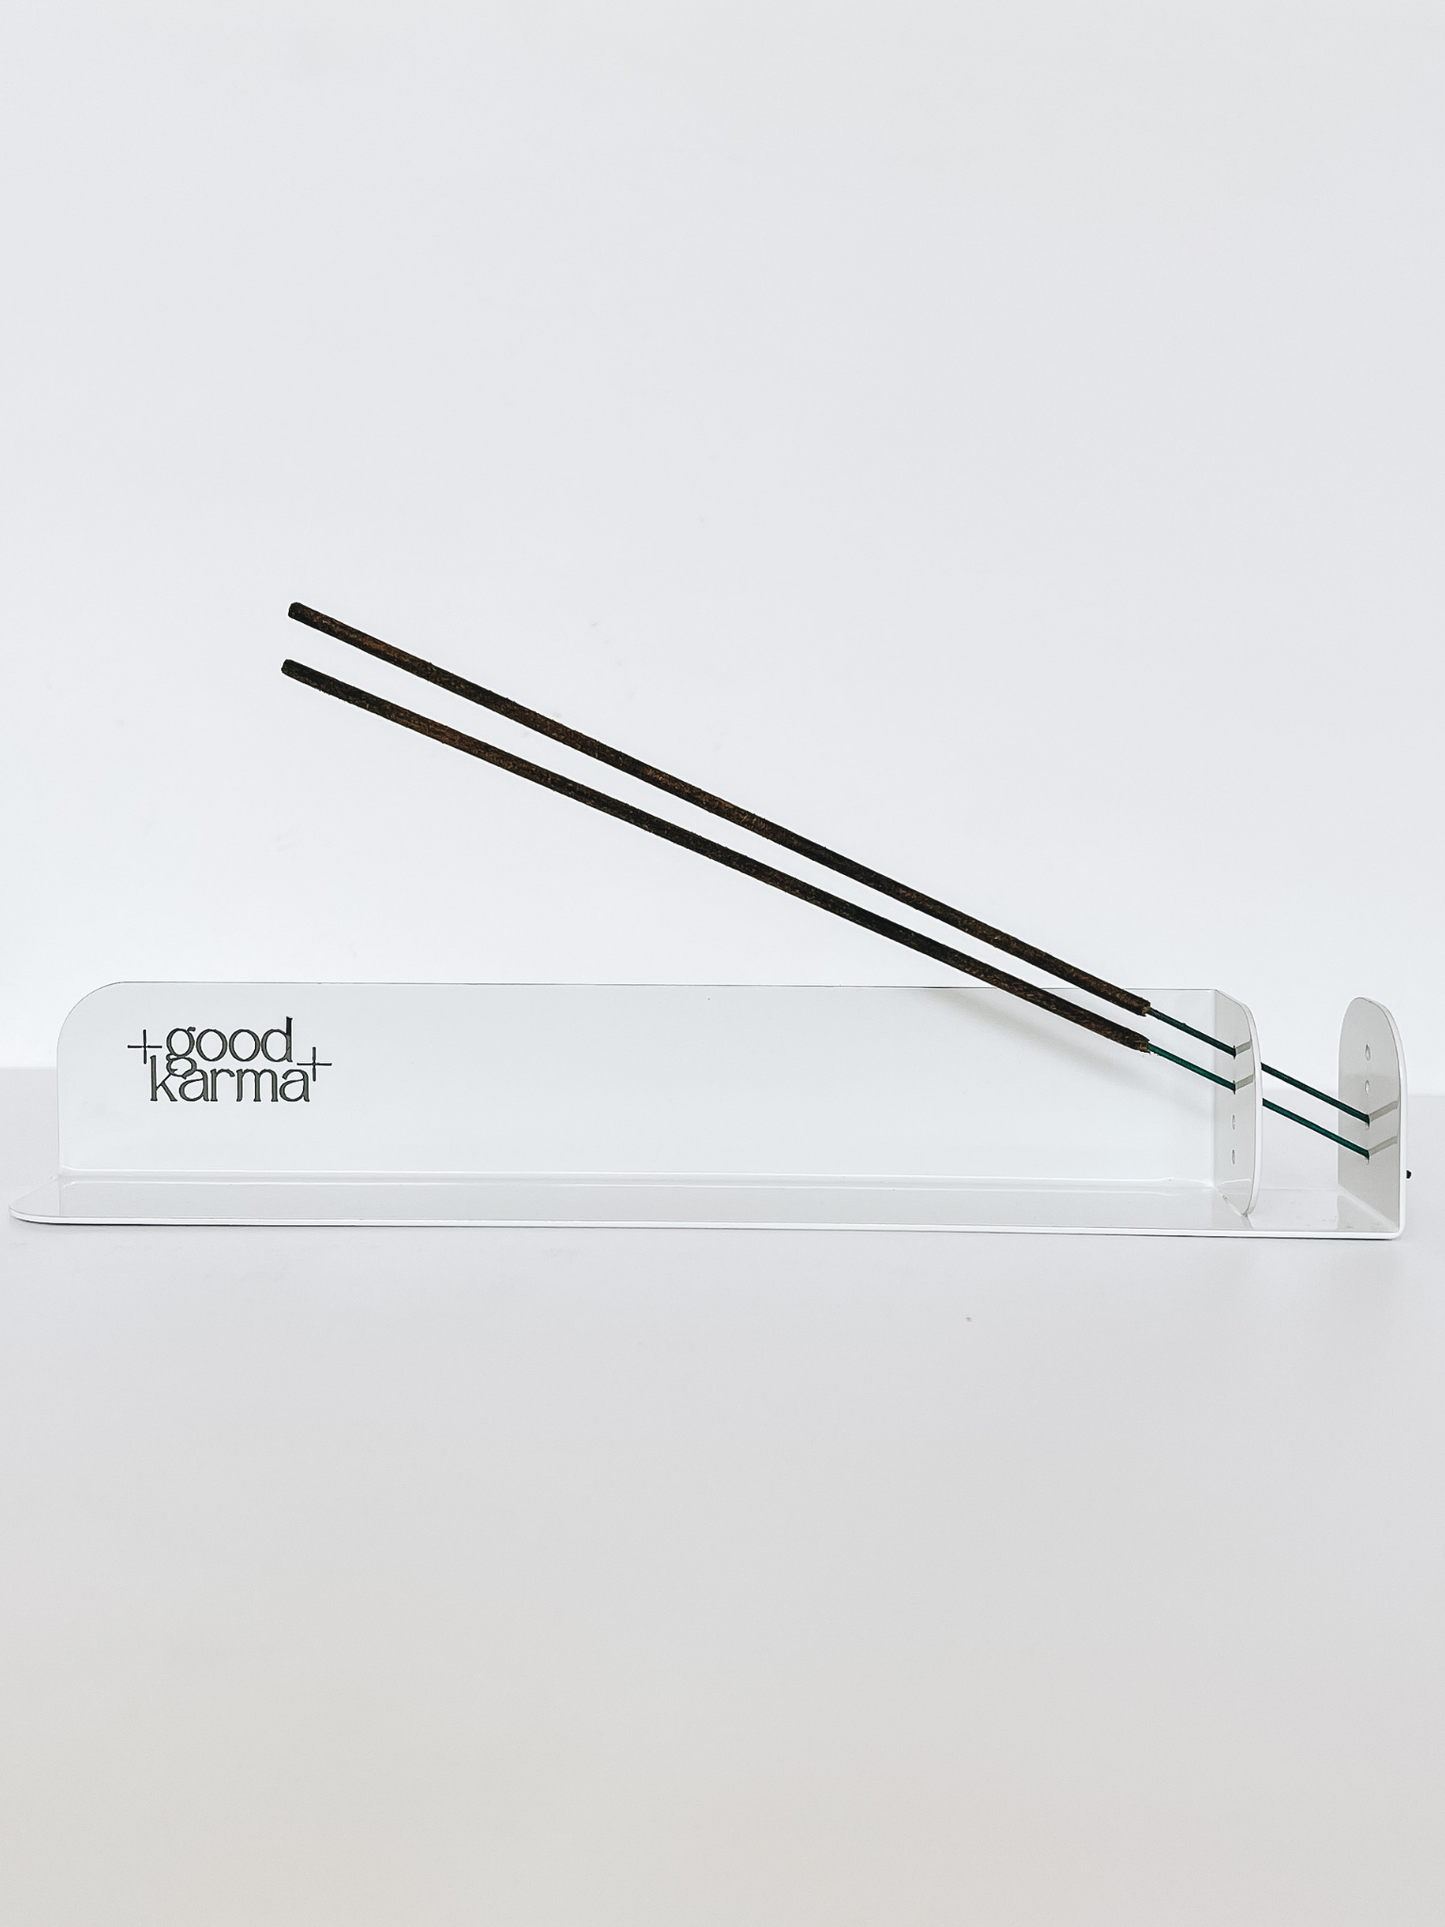 white metal incense sticks holder incense burner with two incense sticks burning at the same tine